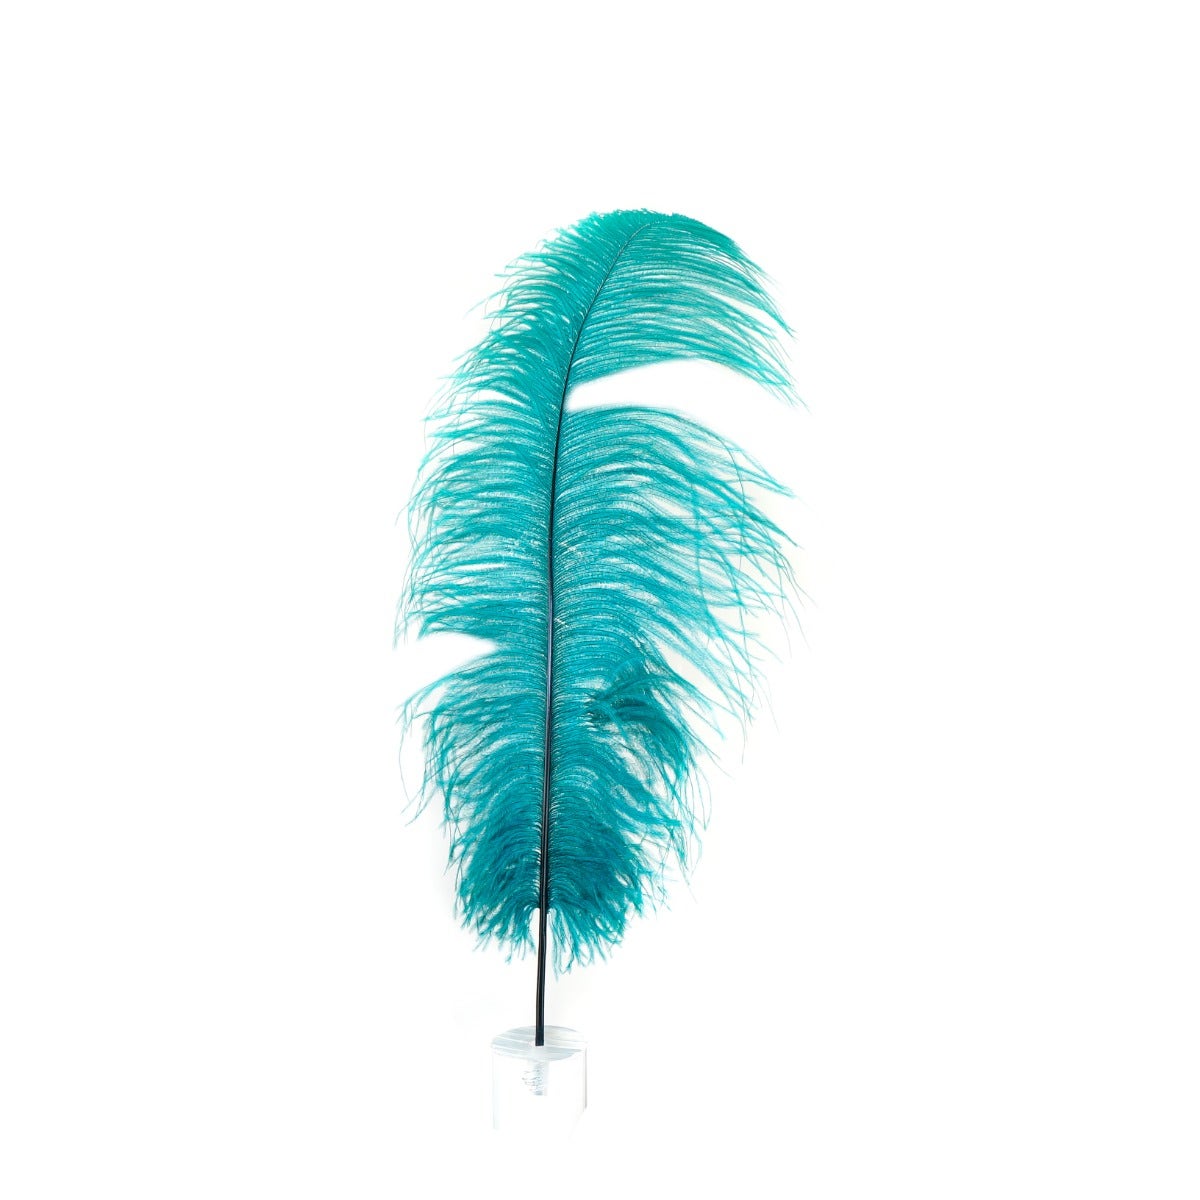 Bulk Ostrich Feathers –  by Zucker Feather